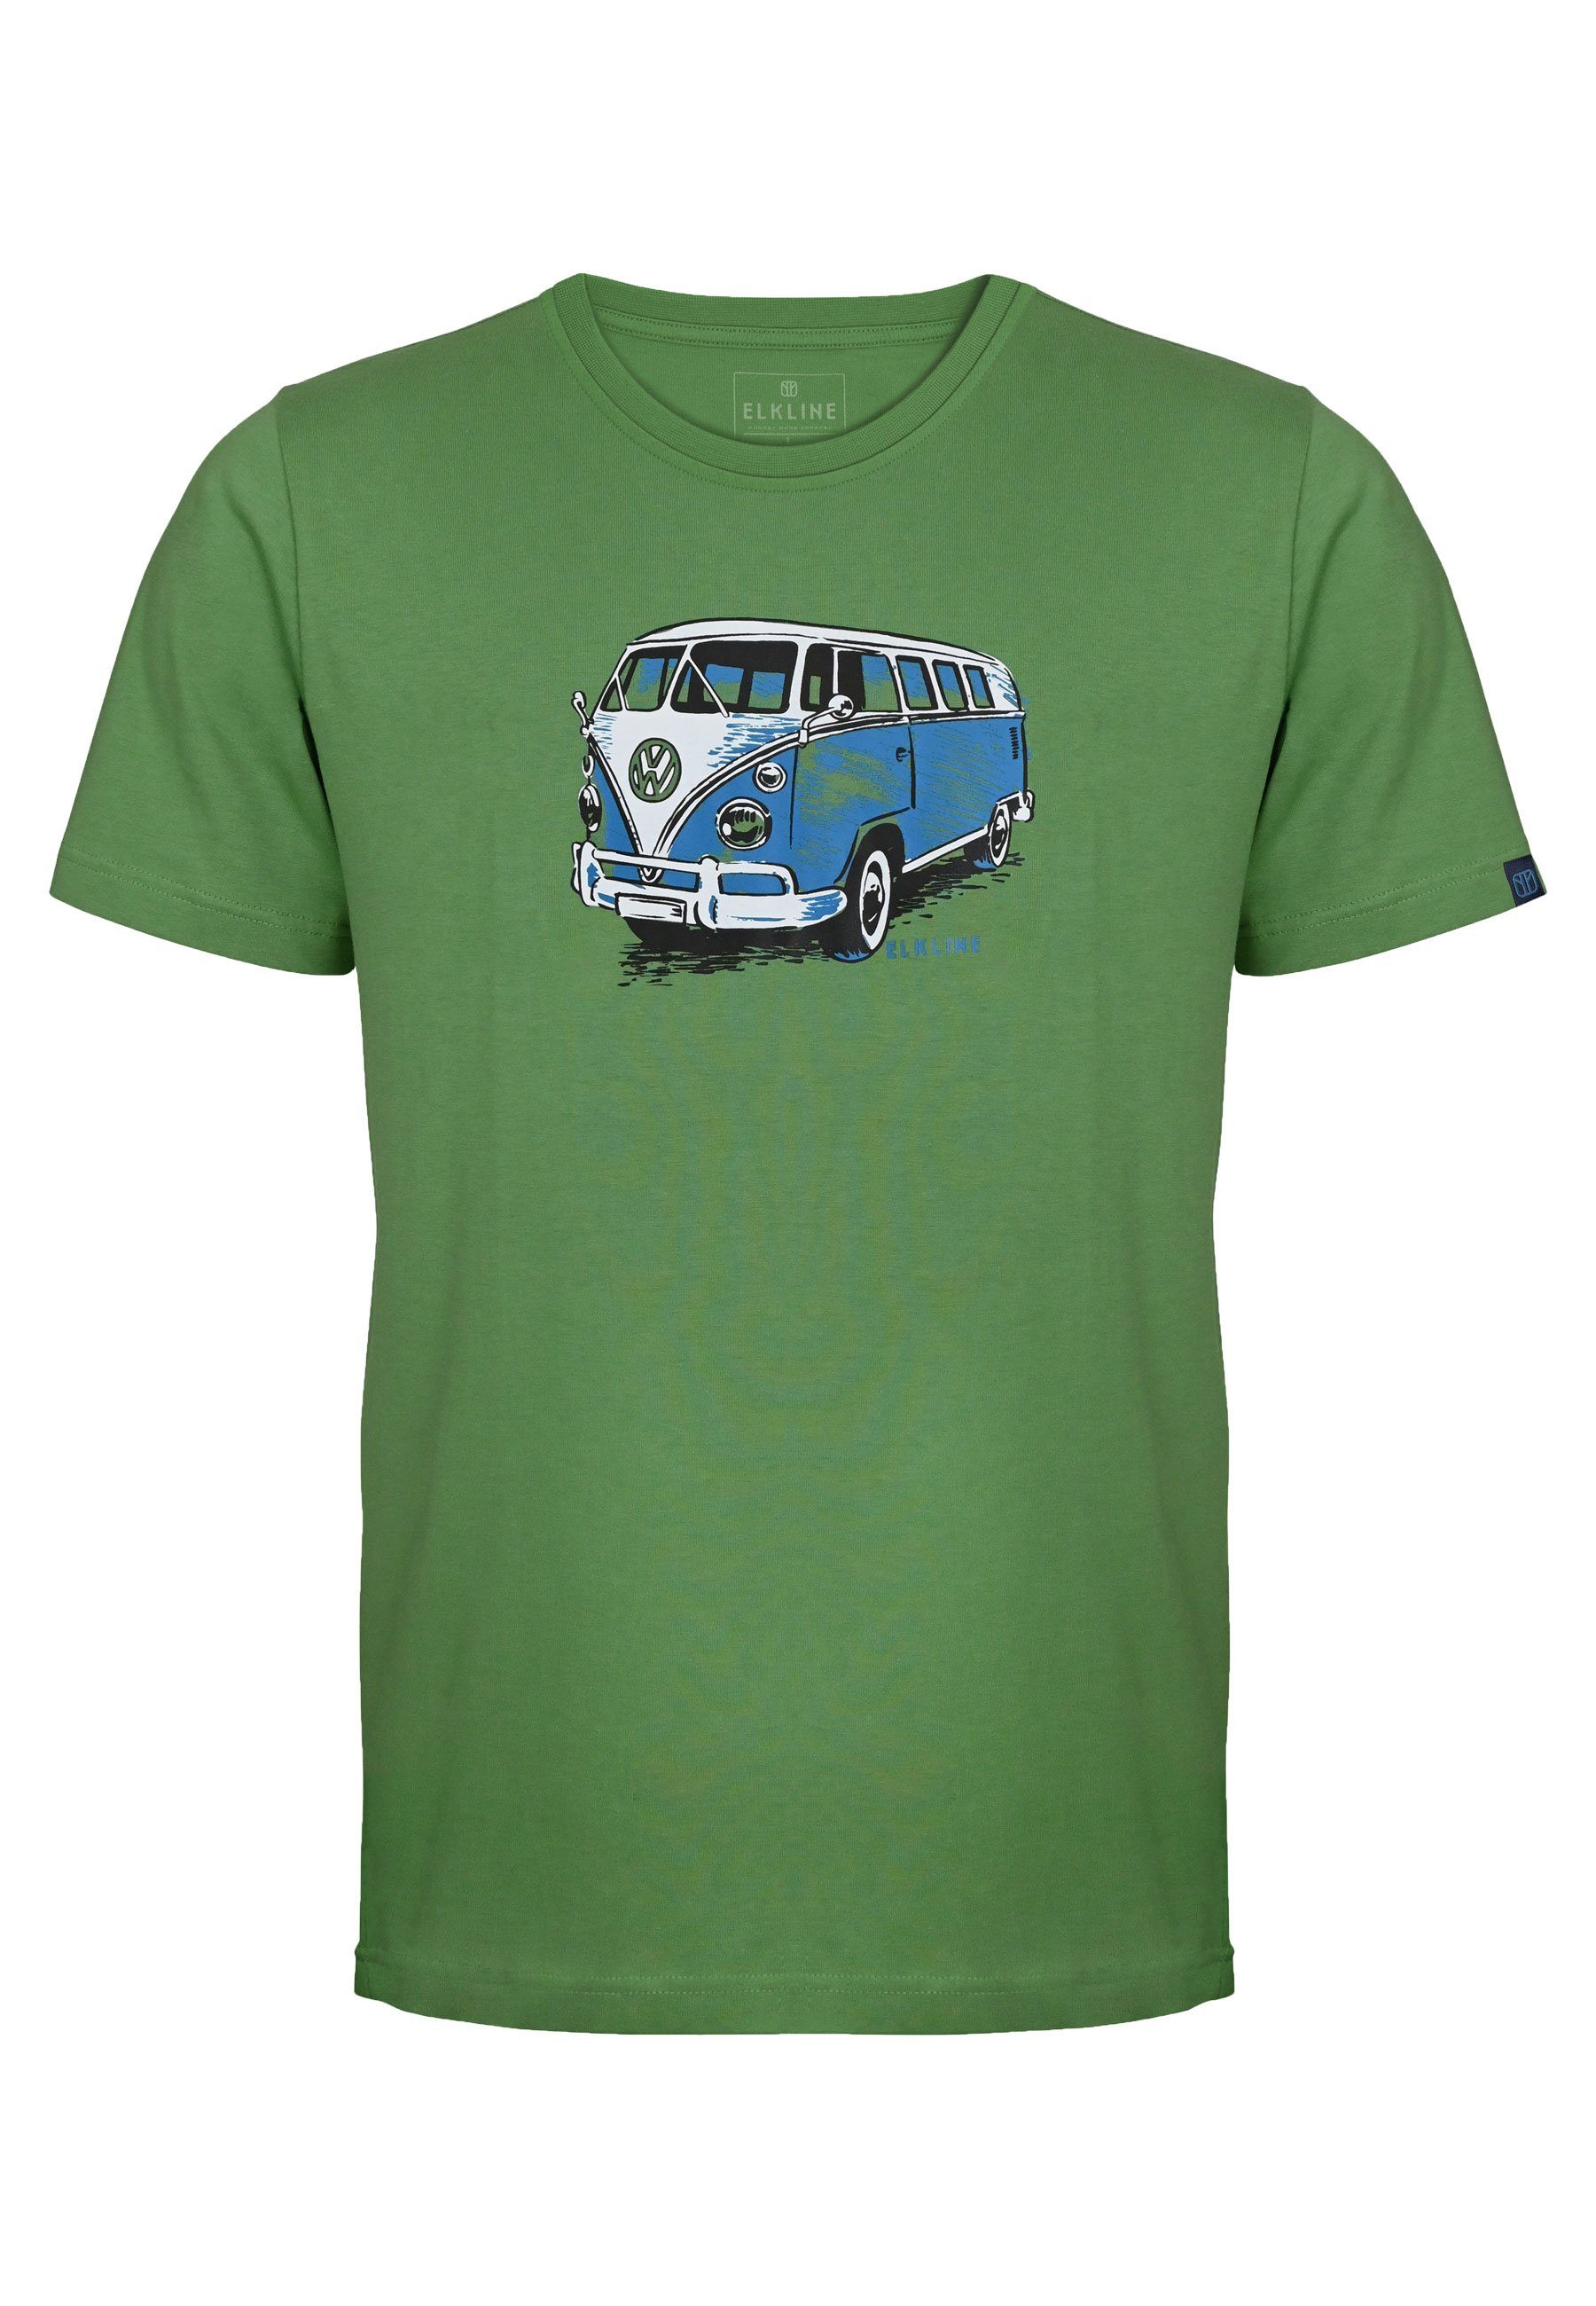 T-Shirt mossgreen VW Retro Bulli Brust Print Gassenhauer Elkline